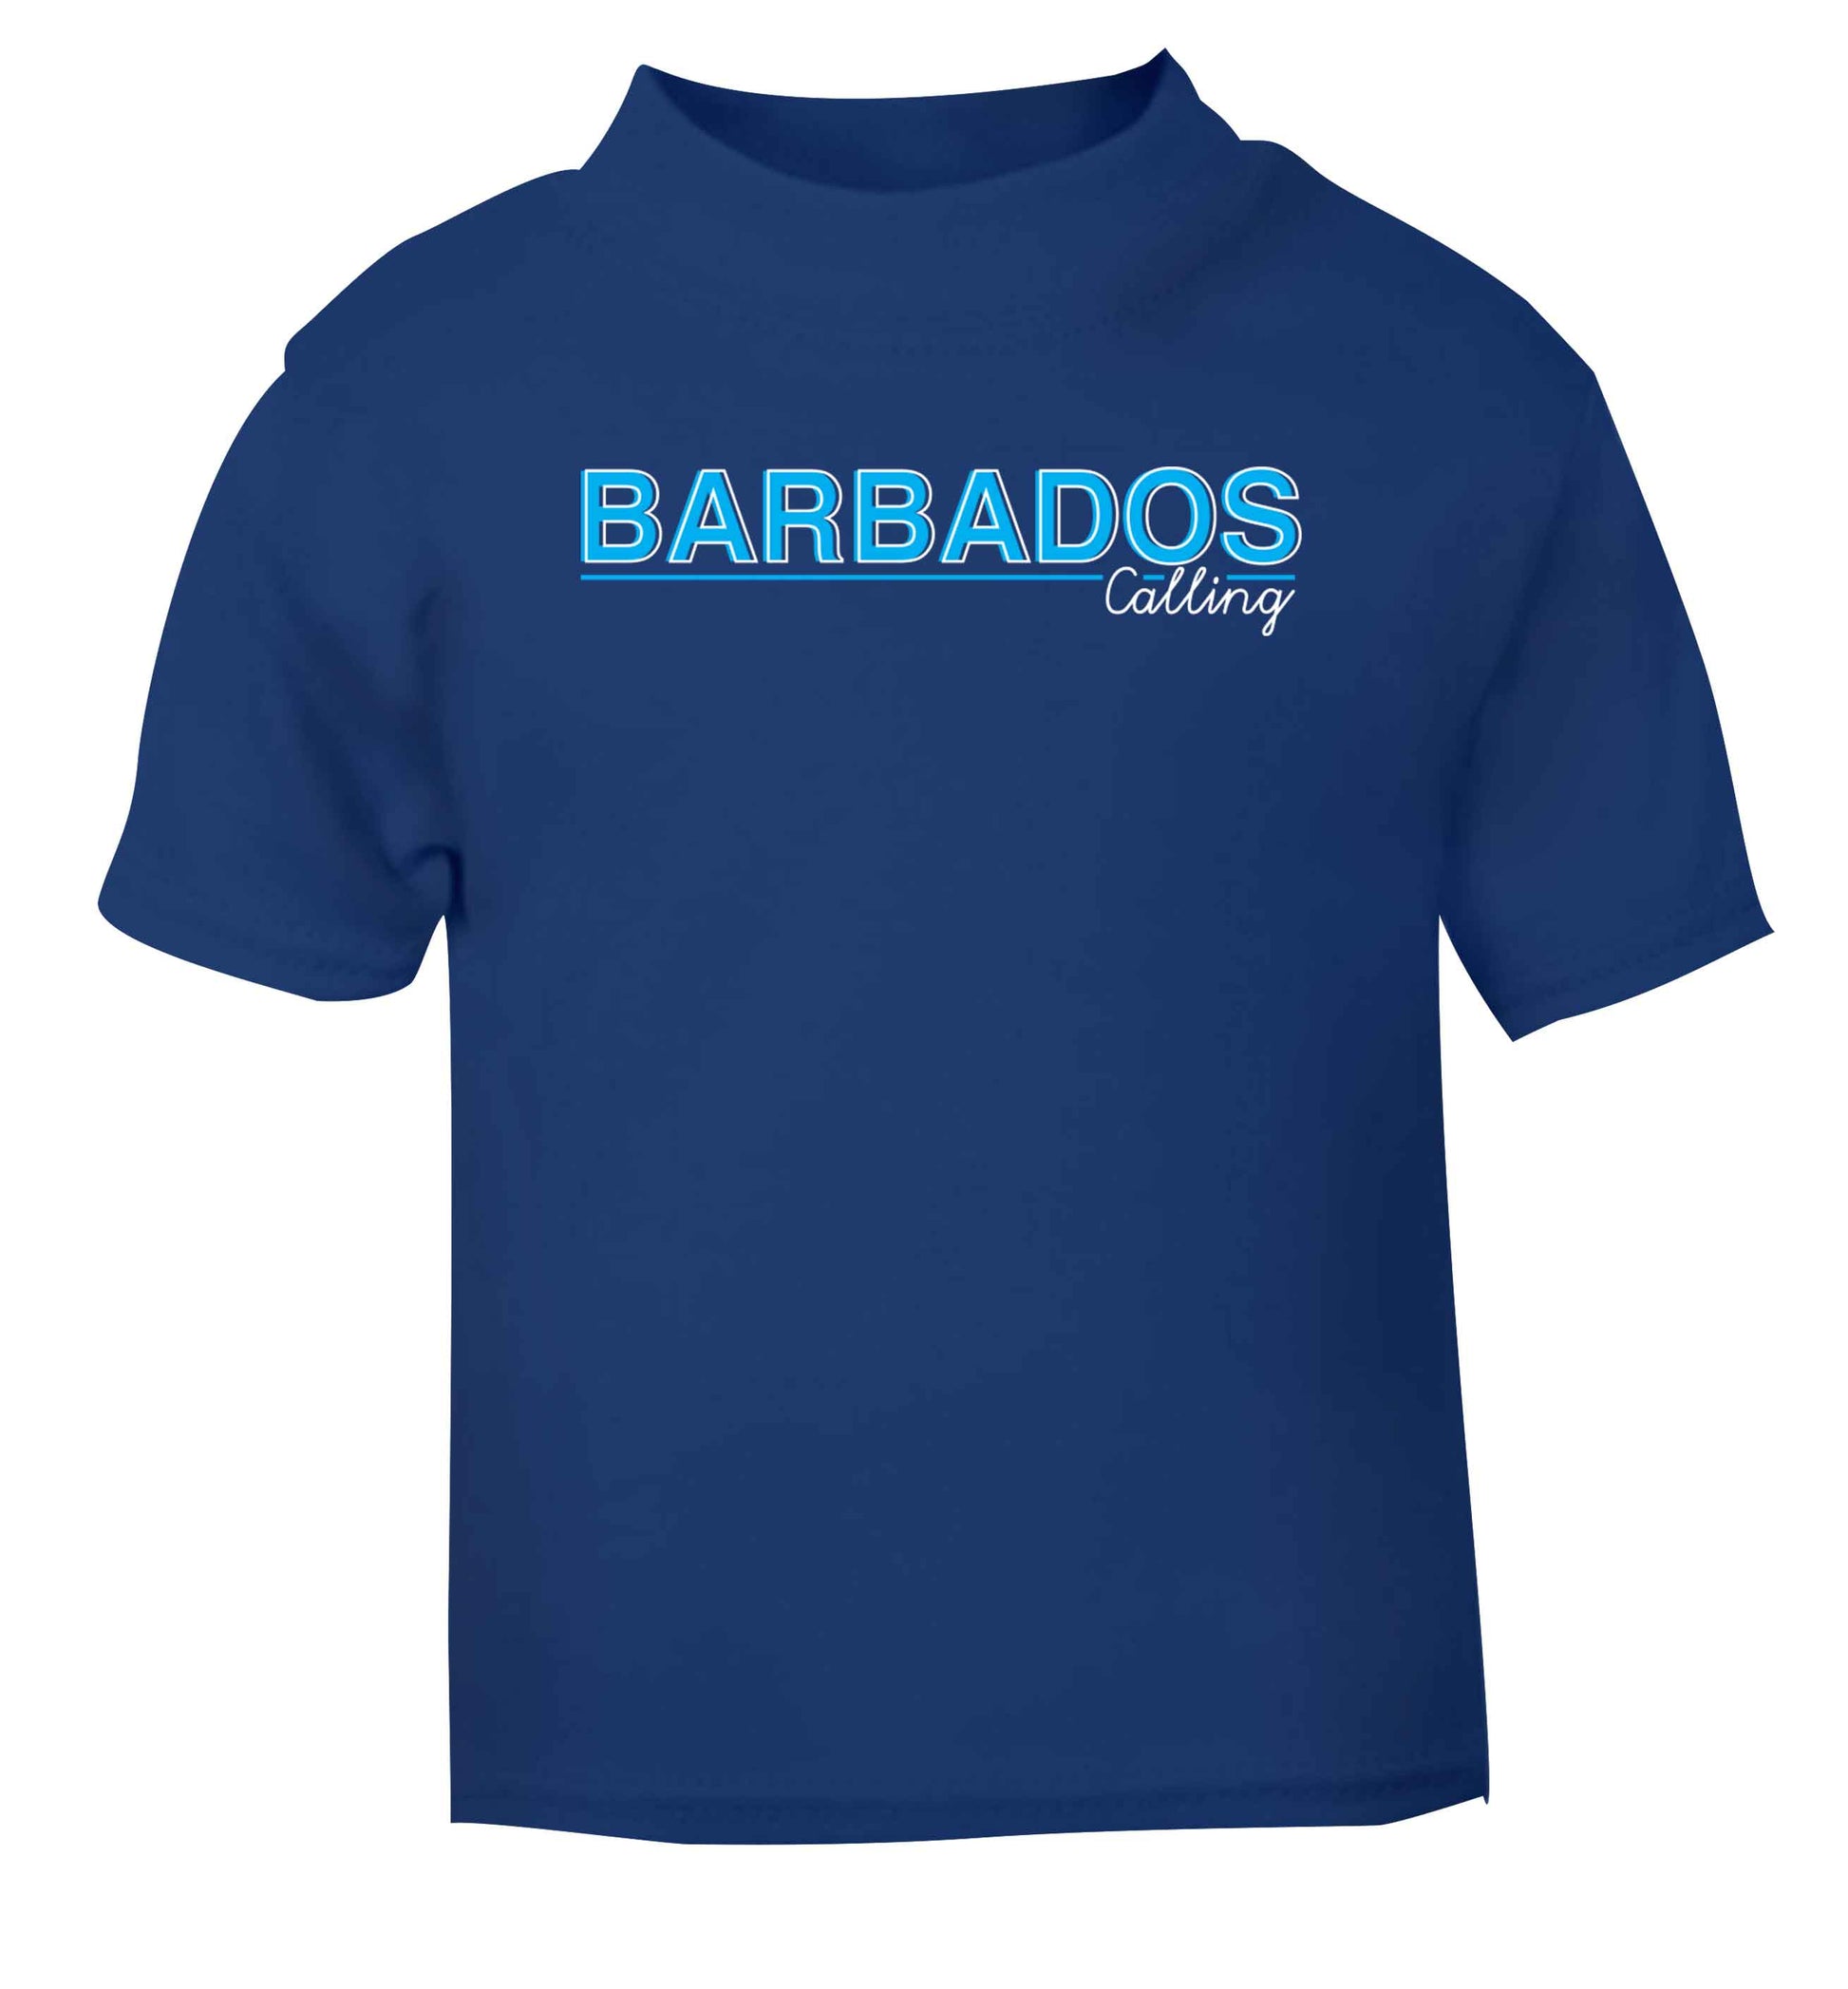 Barbados calling blue Baby Toddler Tshirt 2 Years